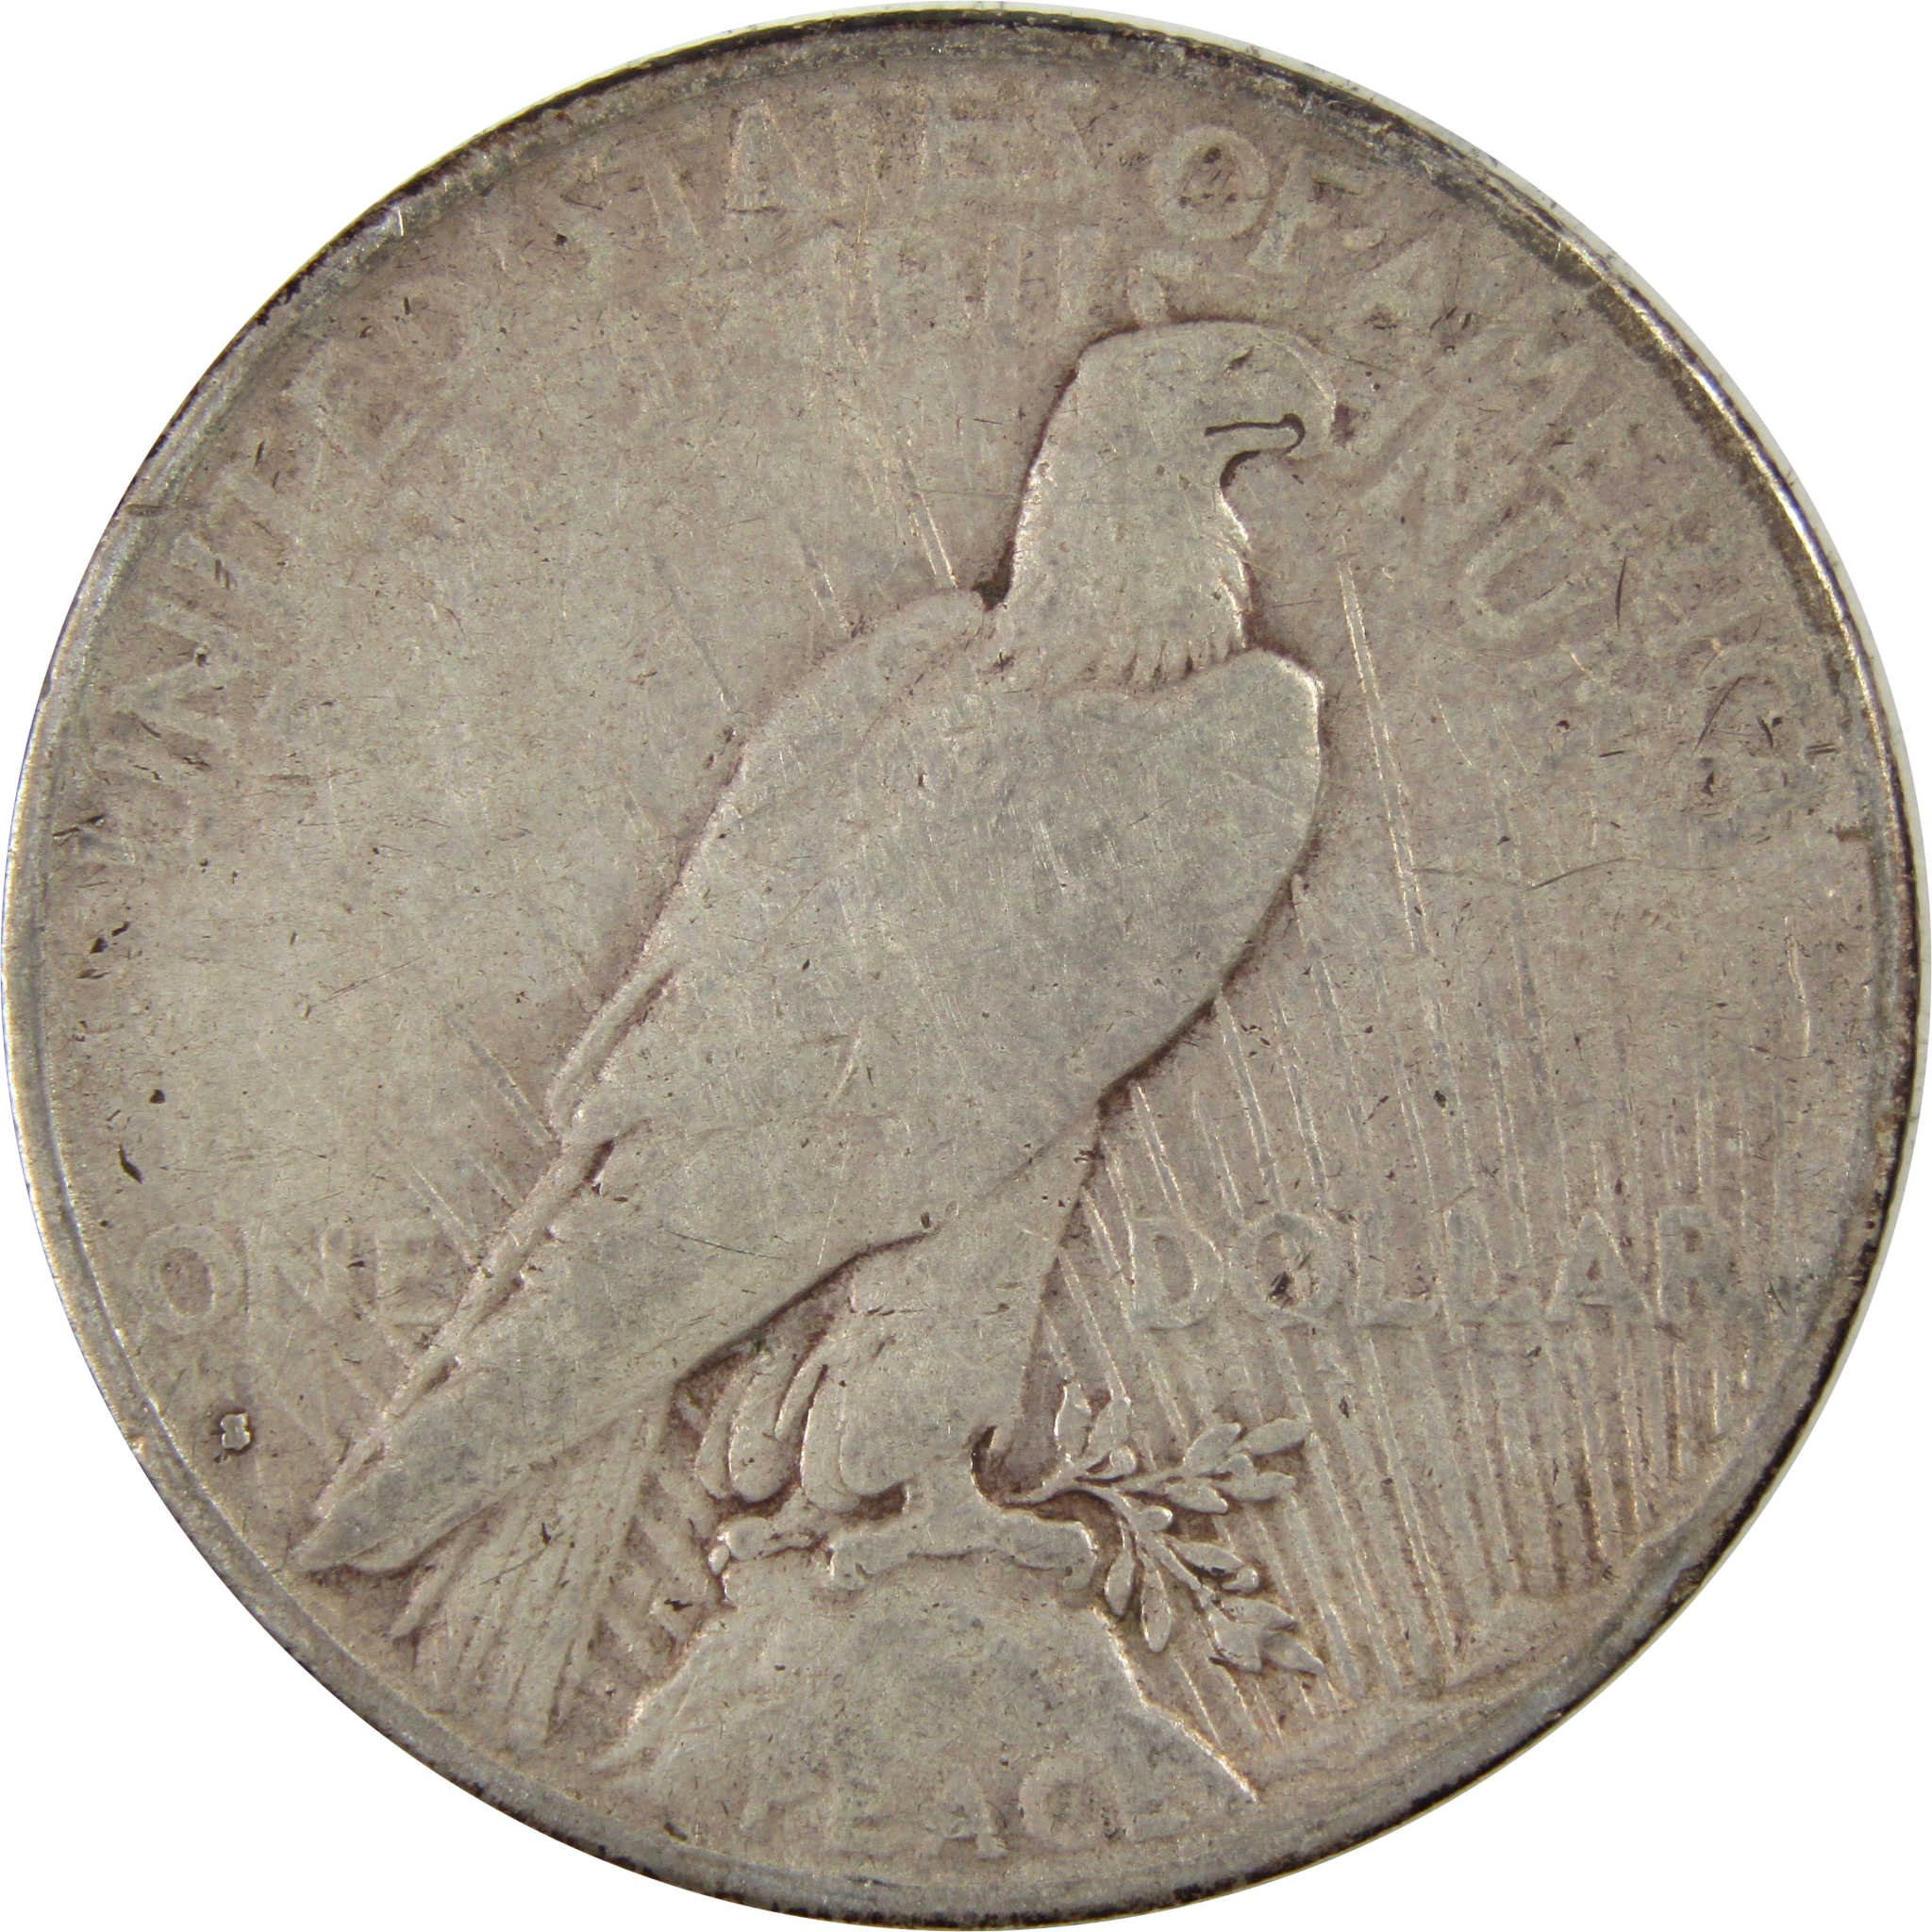 1934 S Peace Dollar VG Very Good 90% Silver $1 Coin SKU:I7851